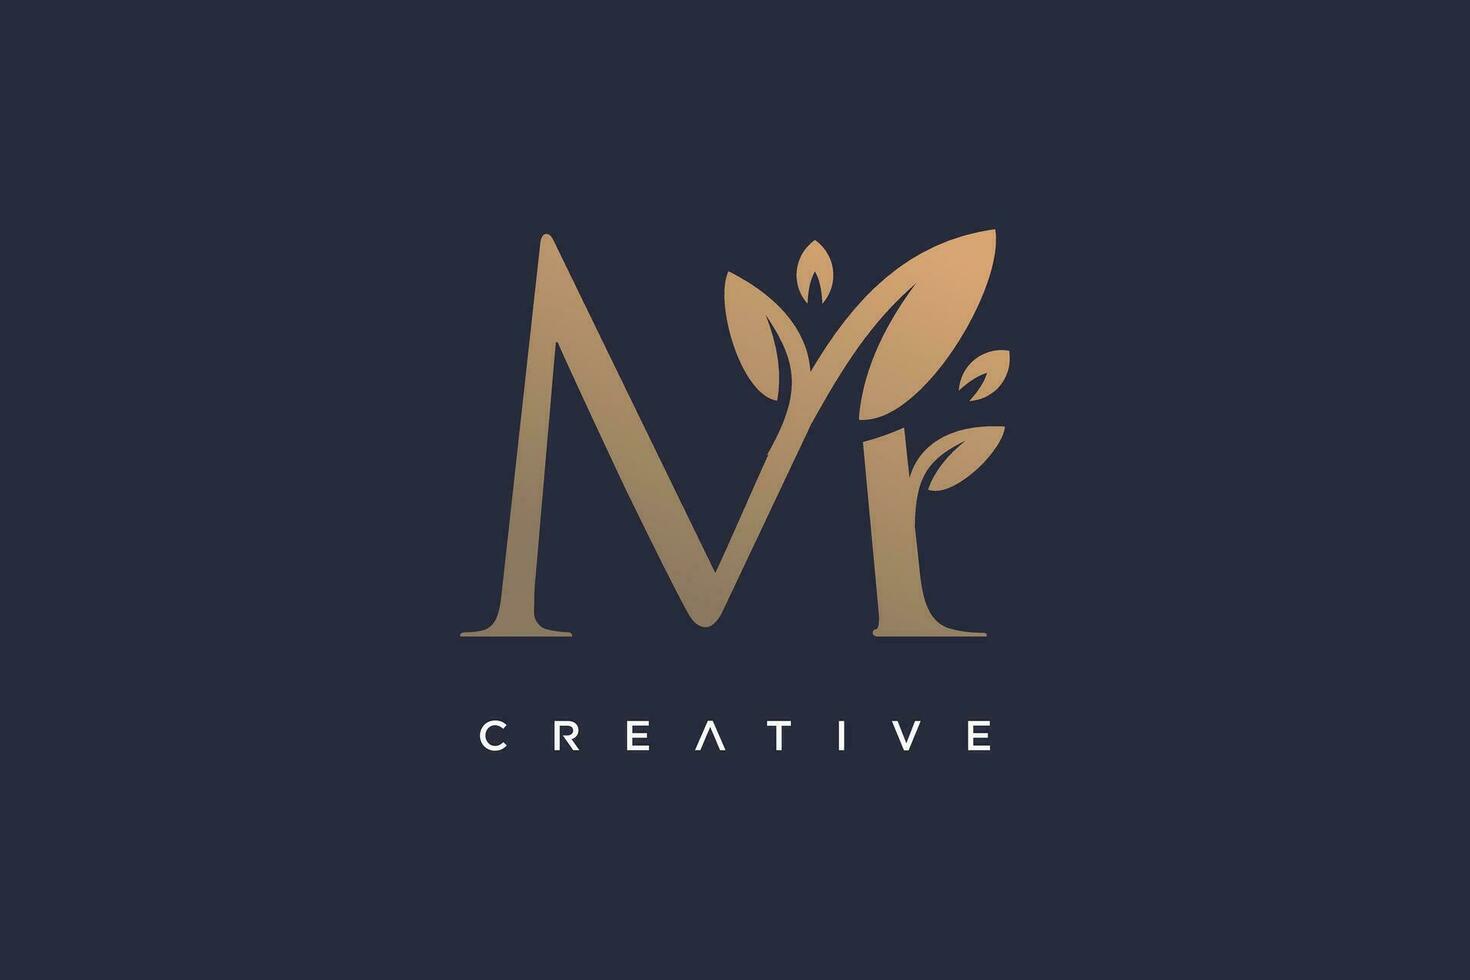 Beauty letter M logo design element vector with creative concept